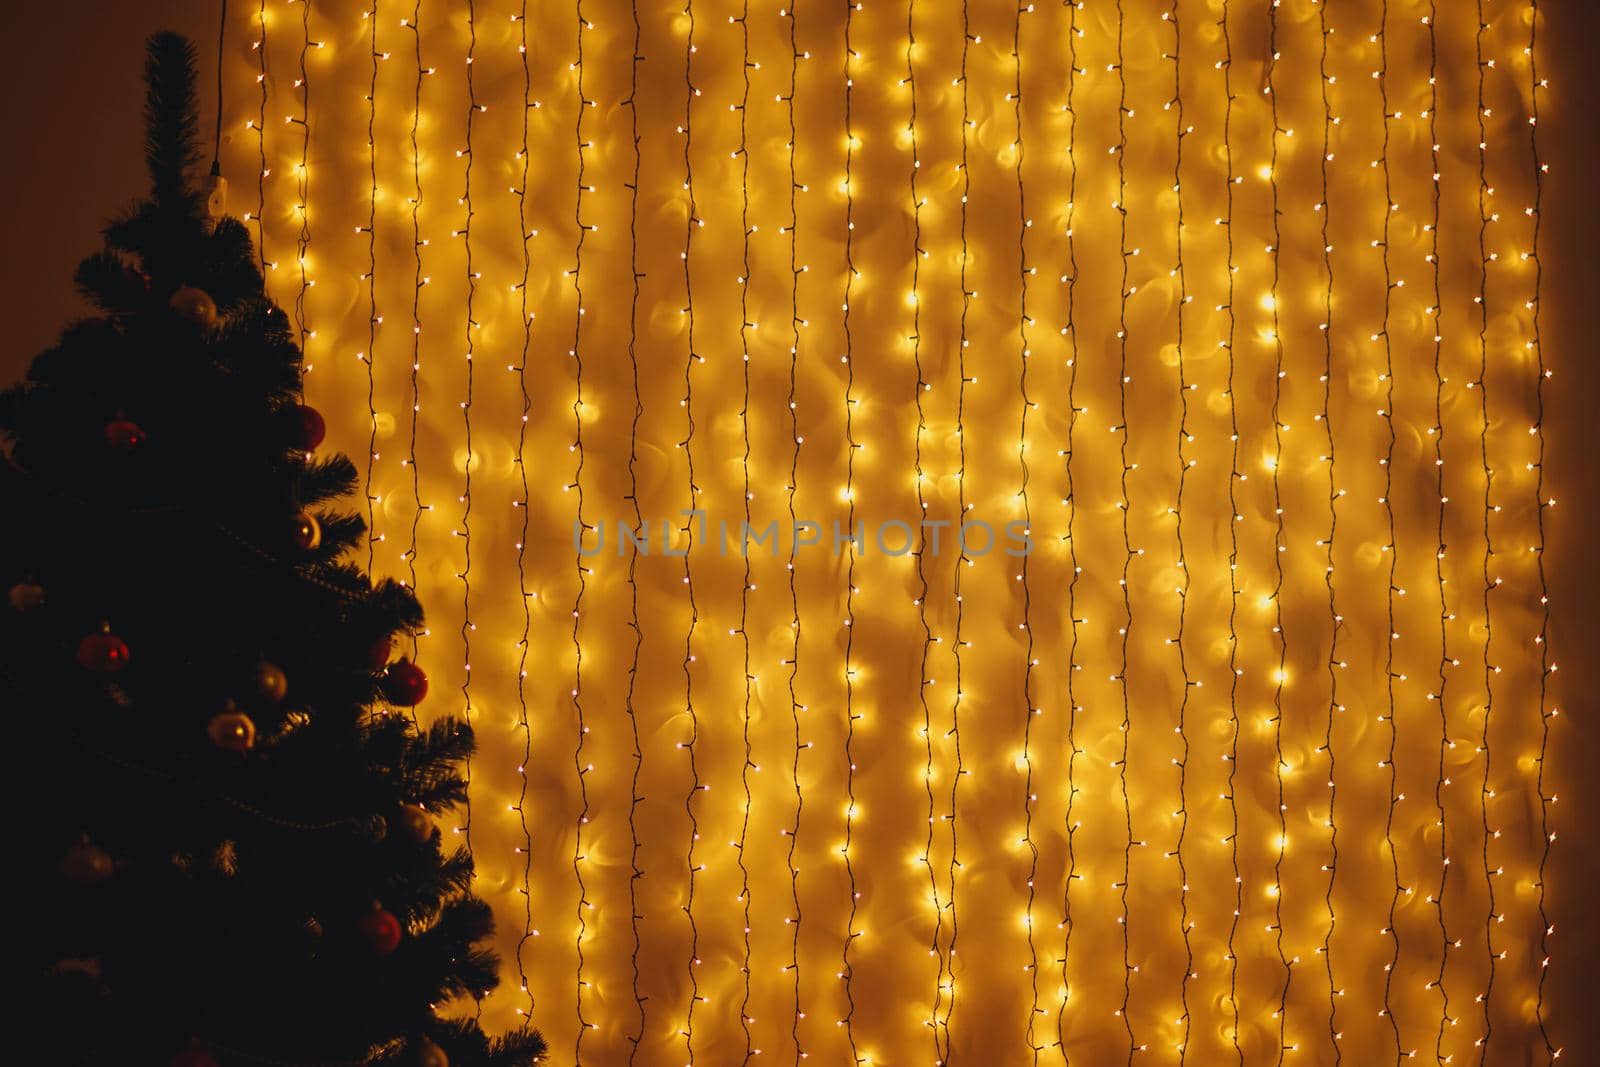 Lighted Christmas garland hanging on the wall